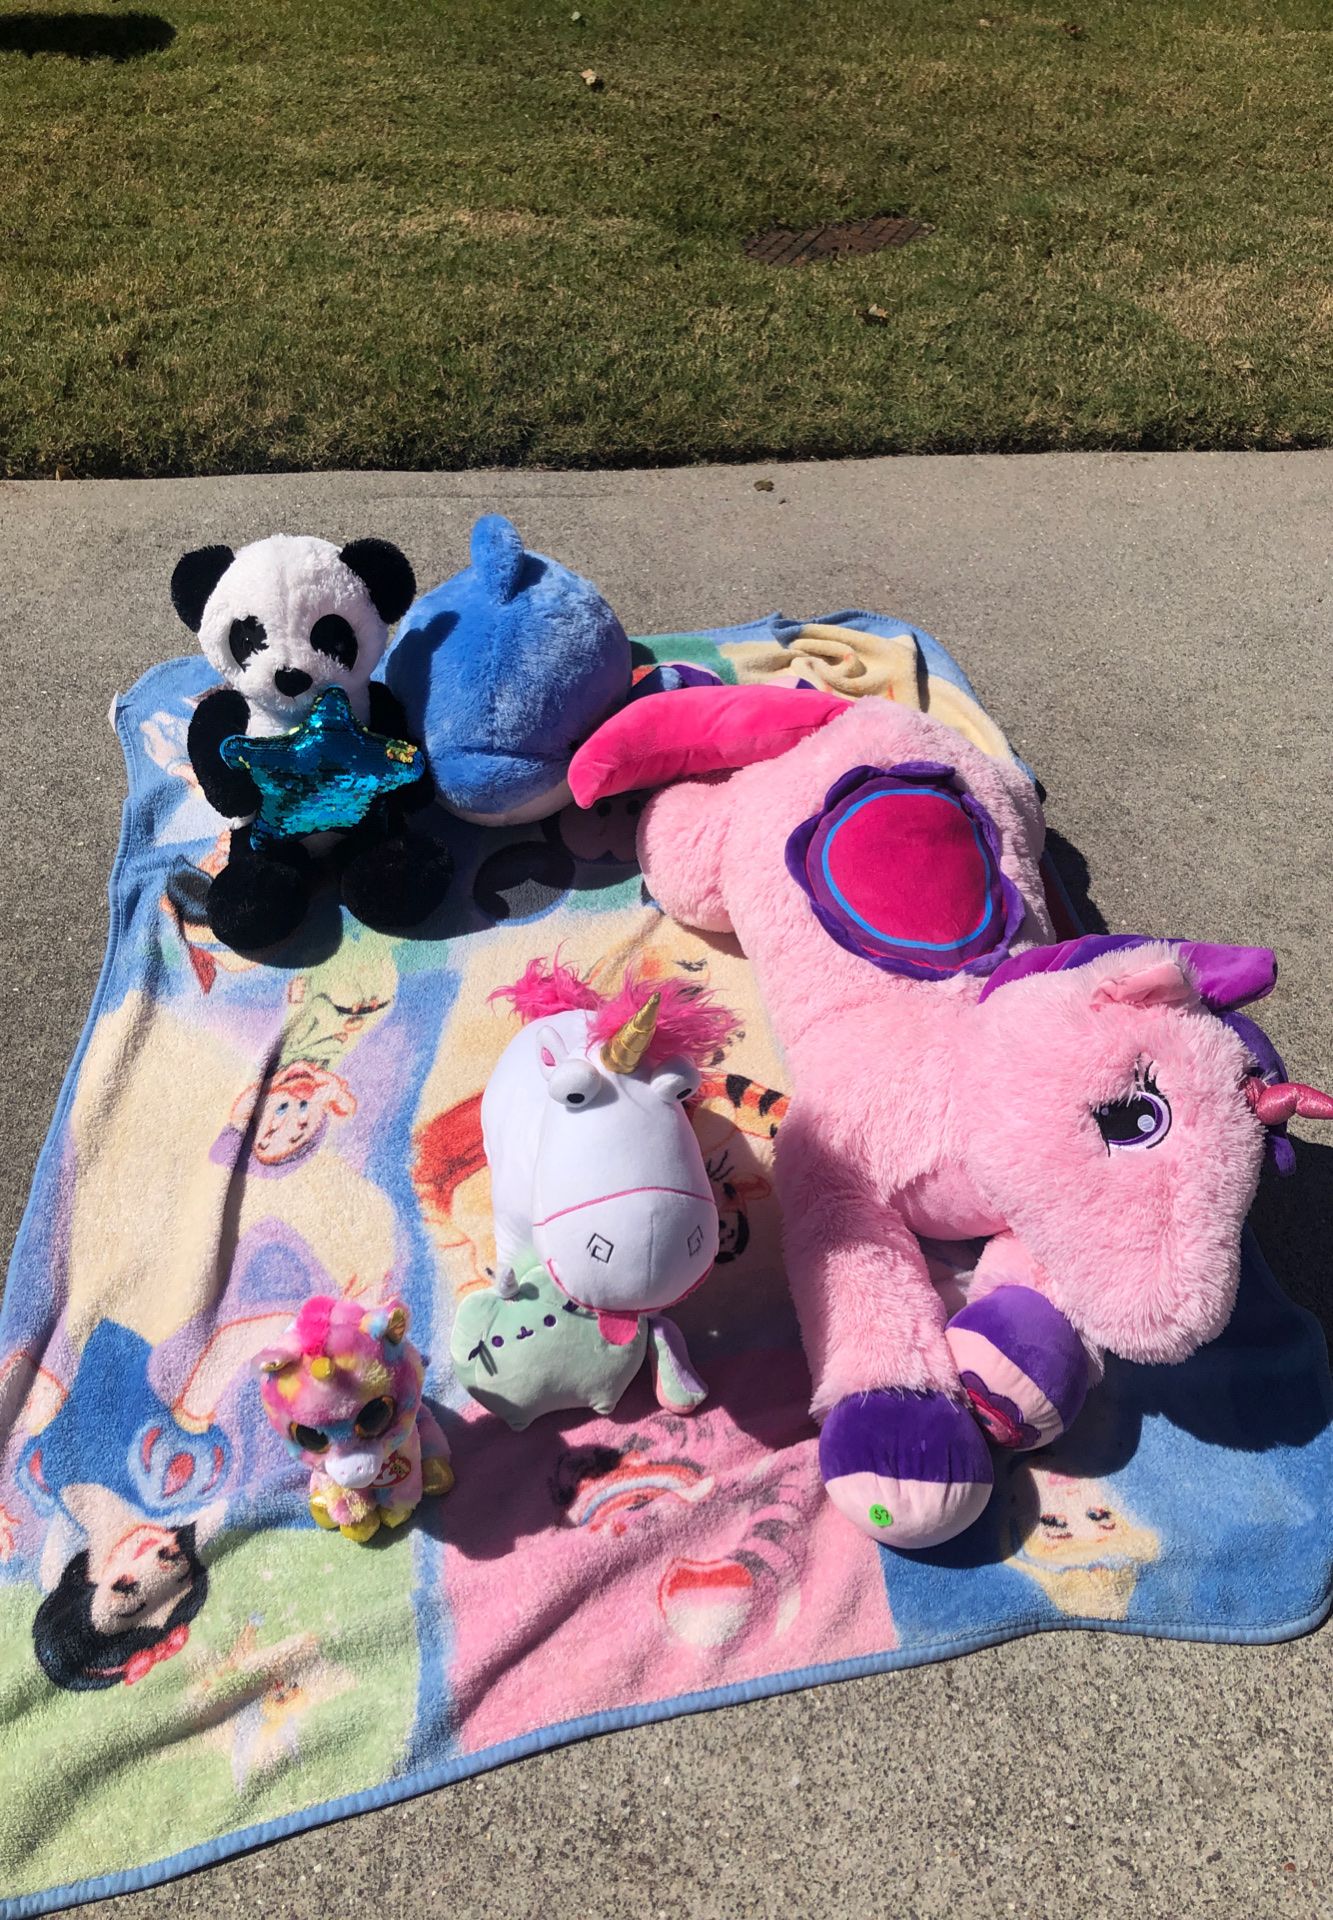 Assorted Stuffed animals